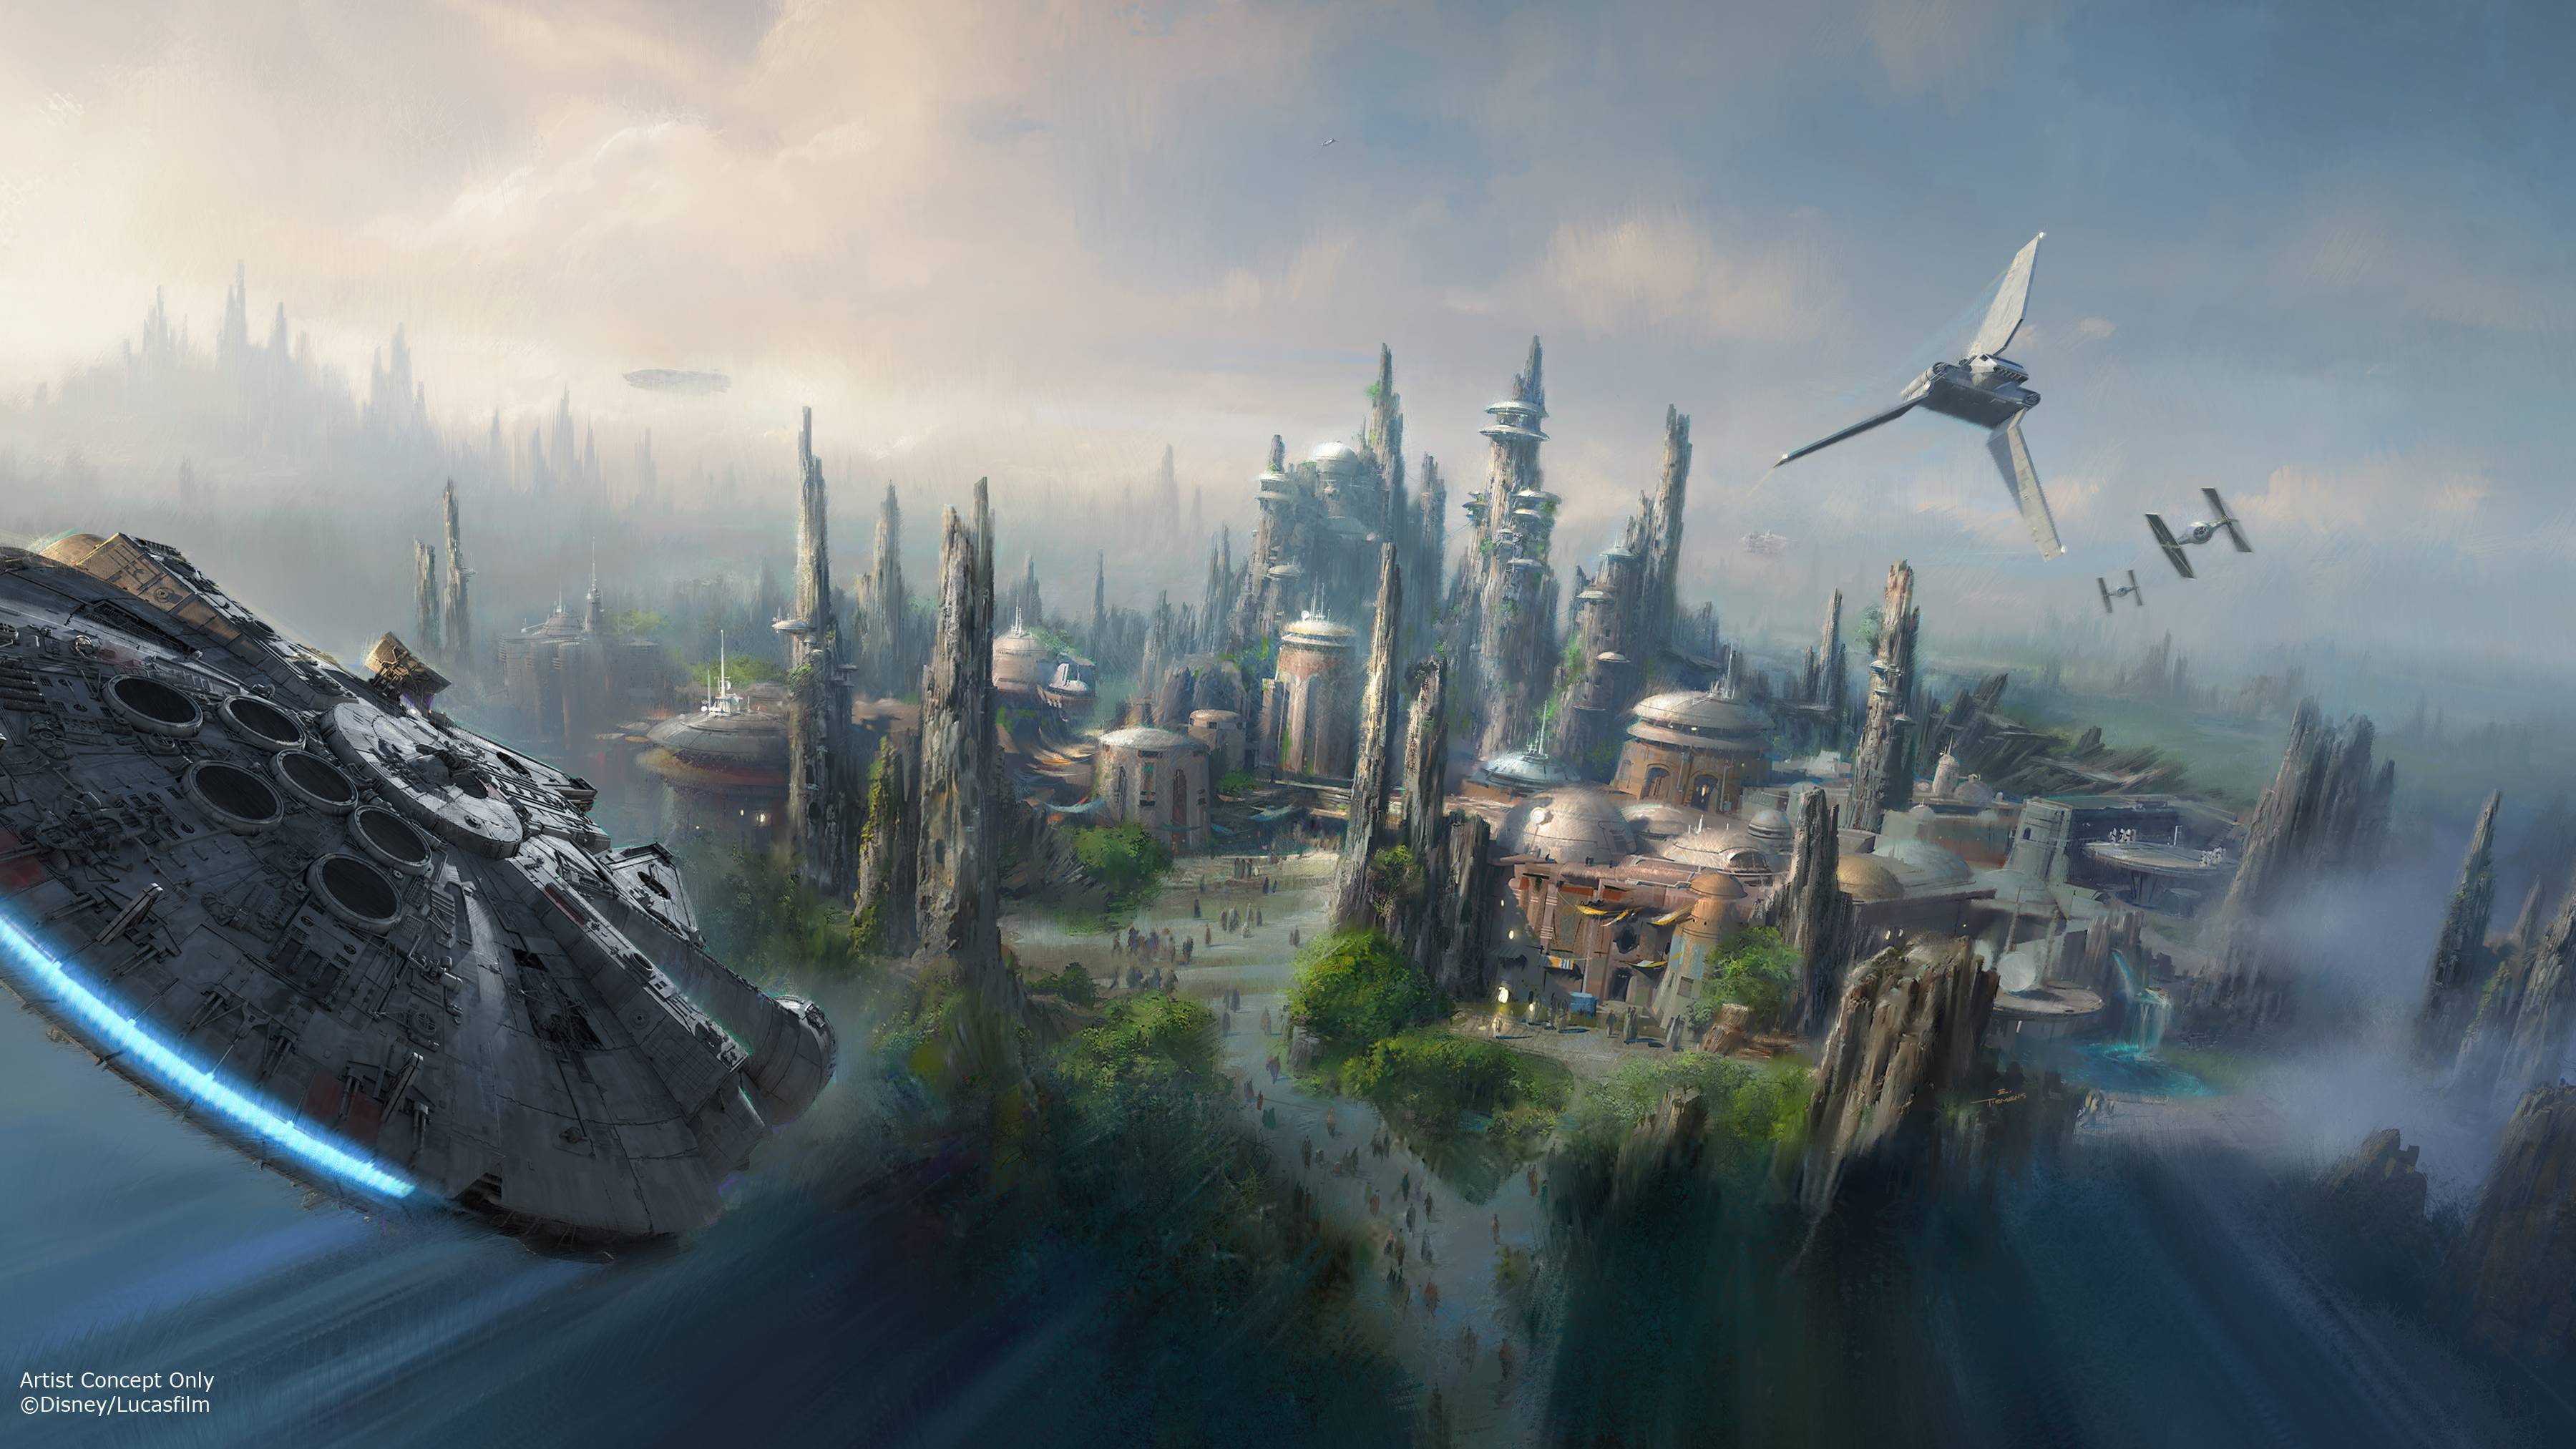 Star Wars themed land concept art